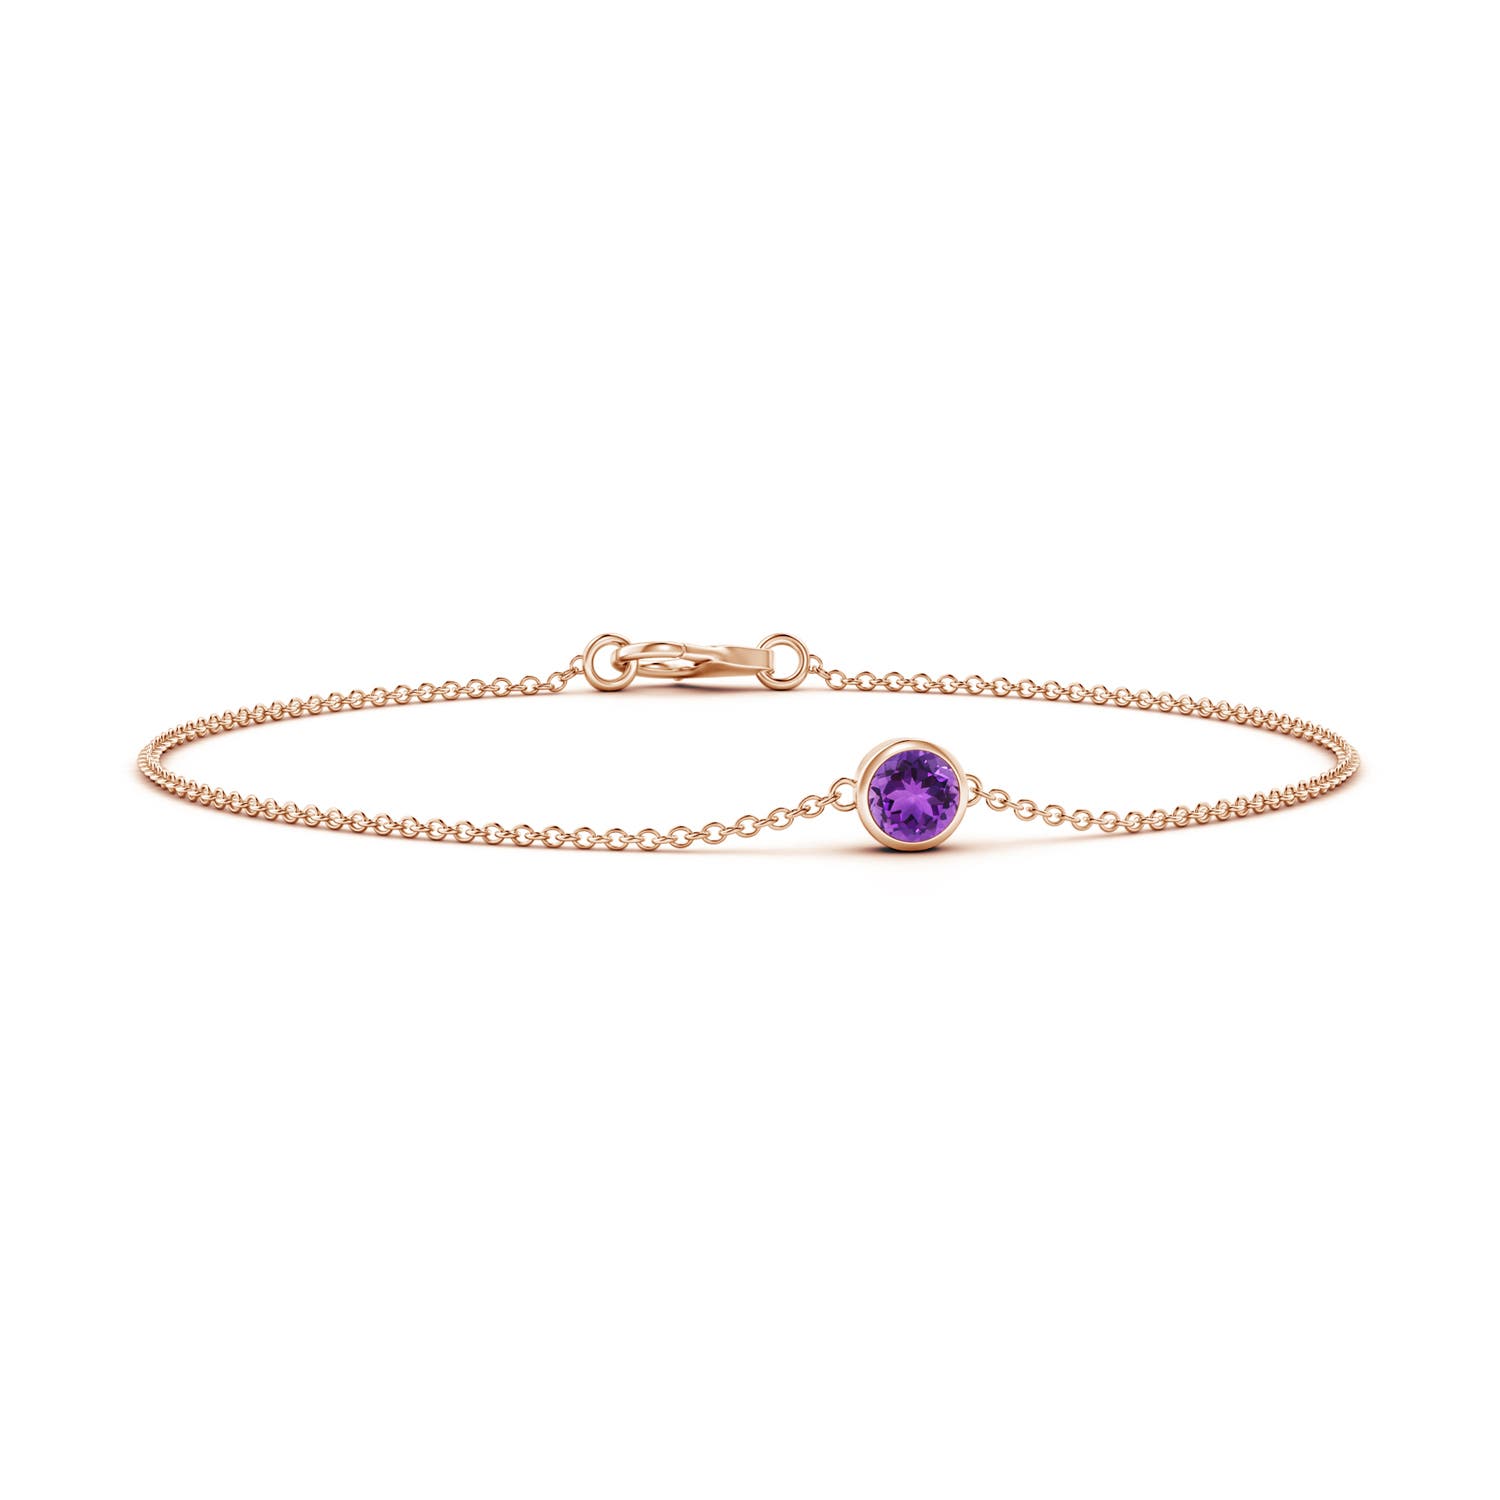 Aquarius amethyst bracelet with star and moon beads - braceletsforever